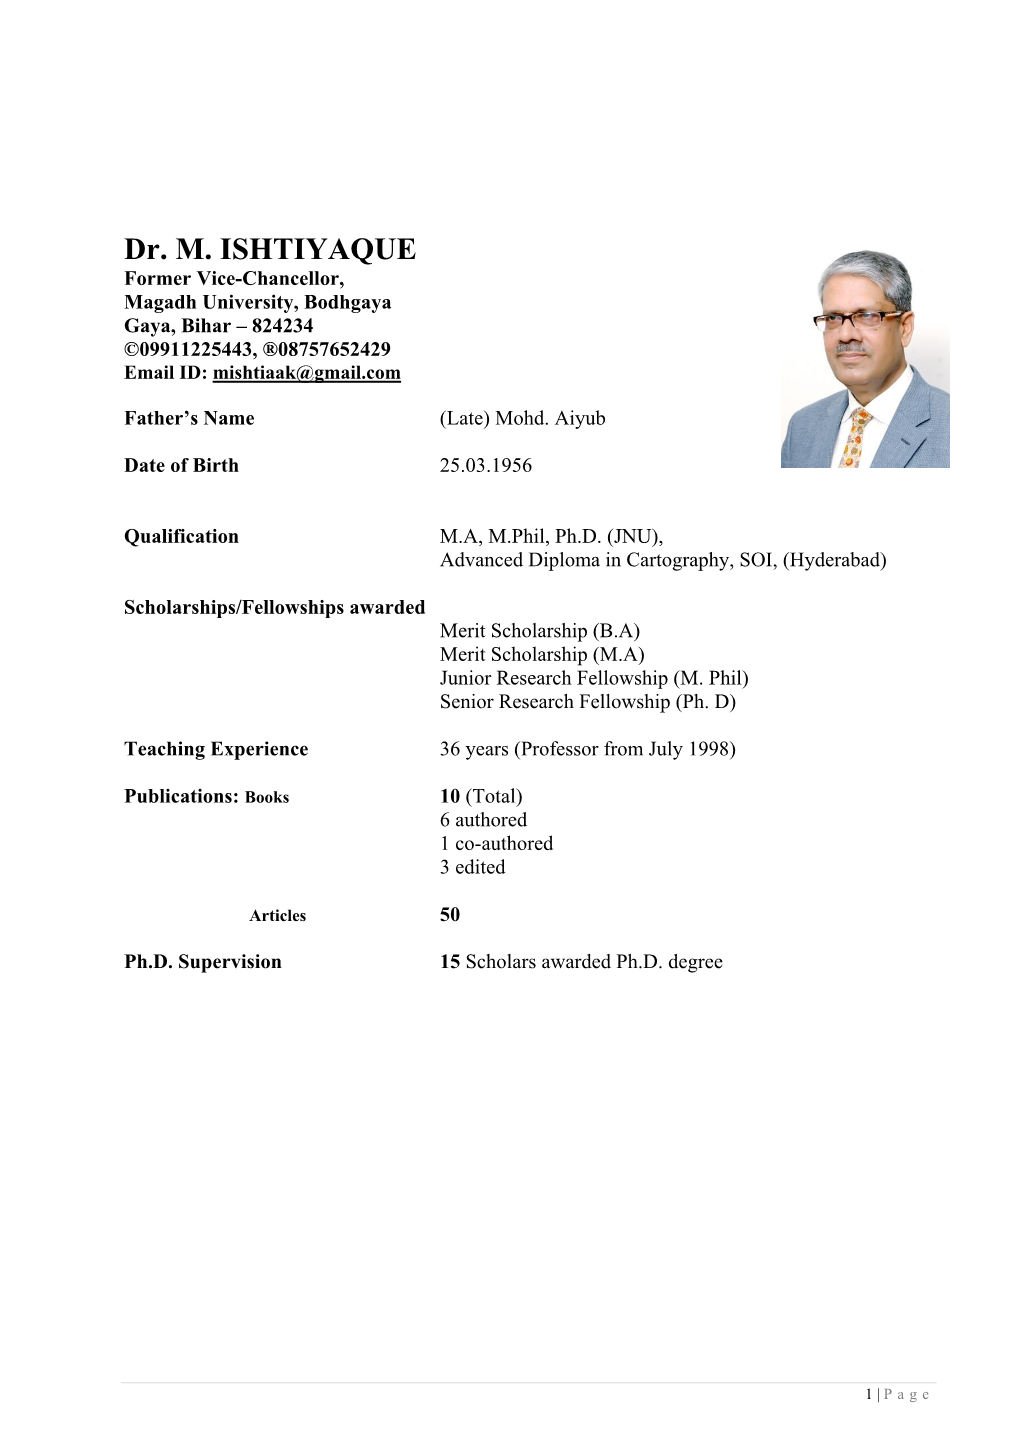 Dr. M. ISHTIYAQUE Former Vice-Chancellor, Magadh University, Bodhgaya Gaya, Bihar – 824234 ©09911225443, ®08757652429 Email ID: Mishtiaak@Gmail.Com